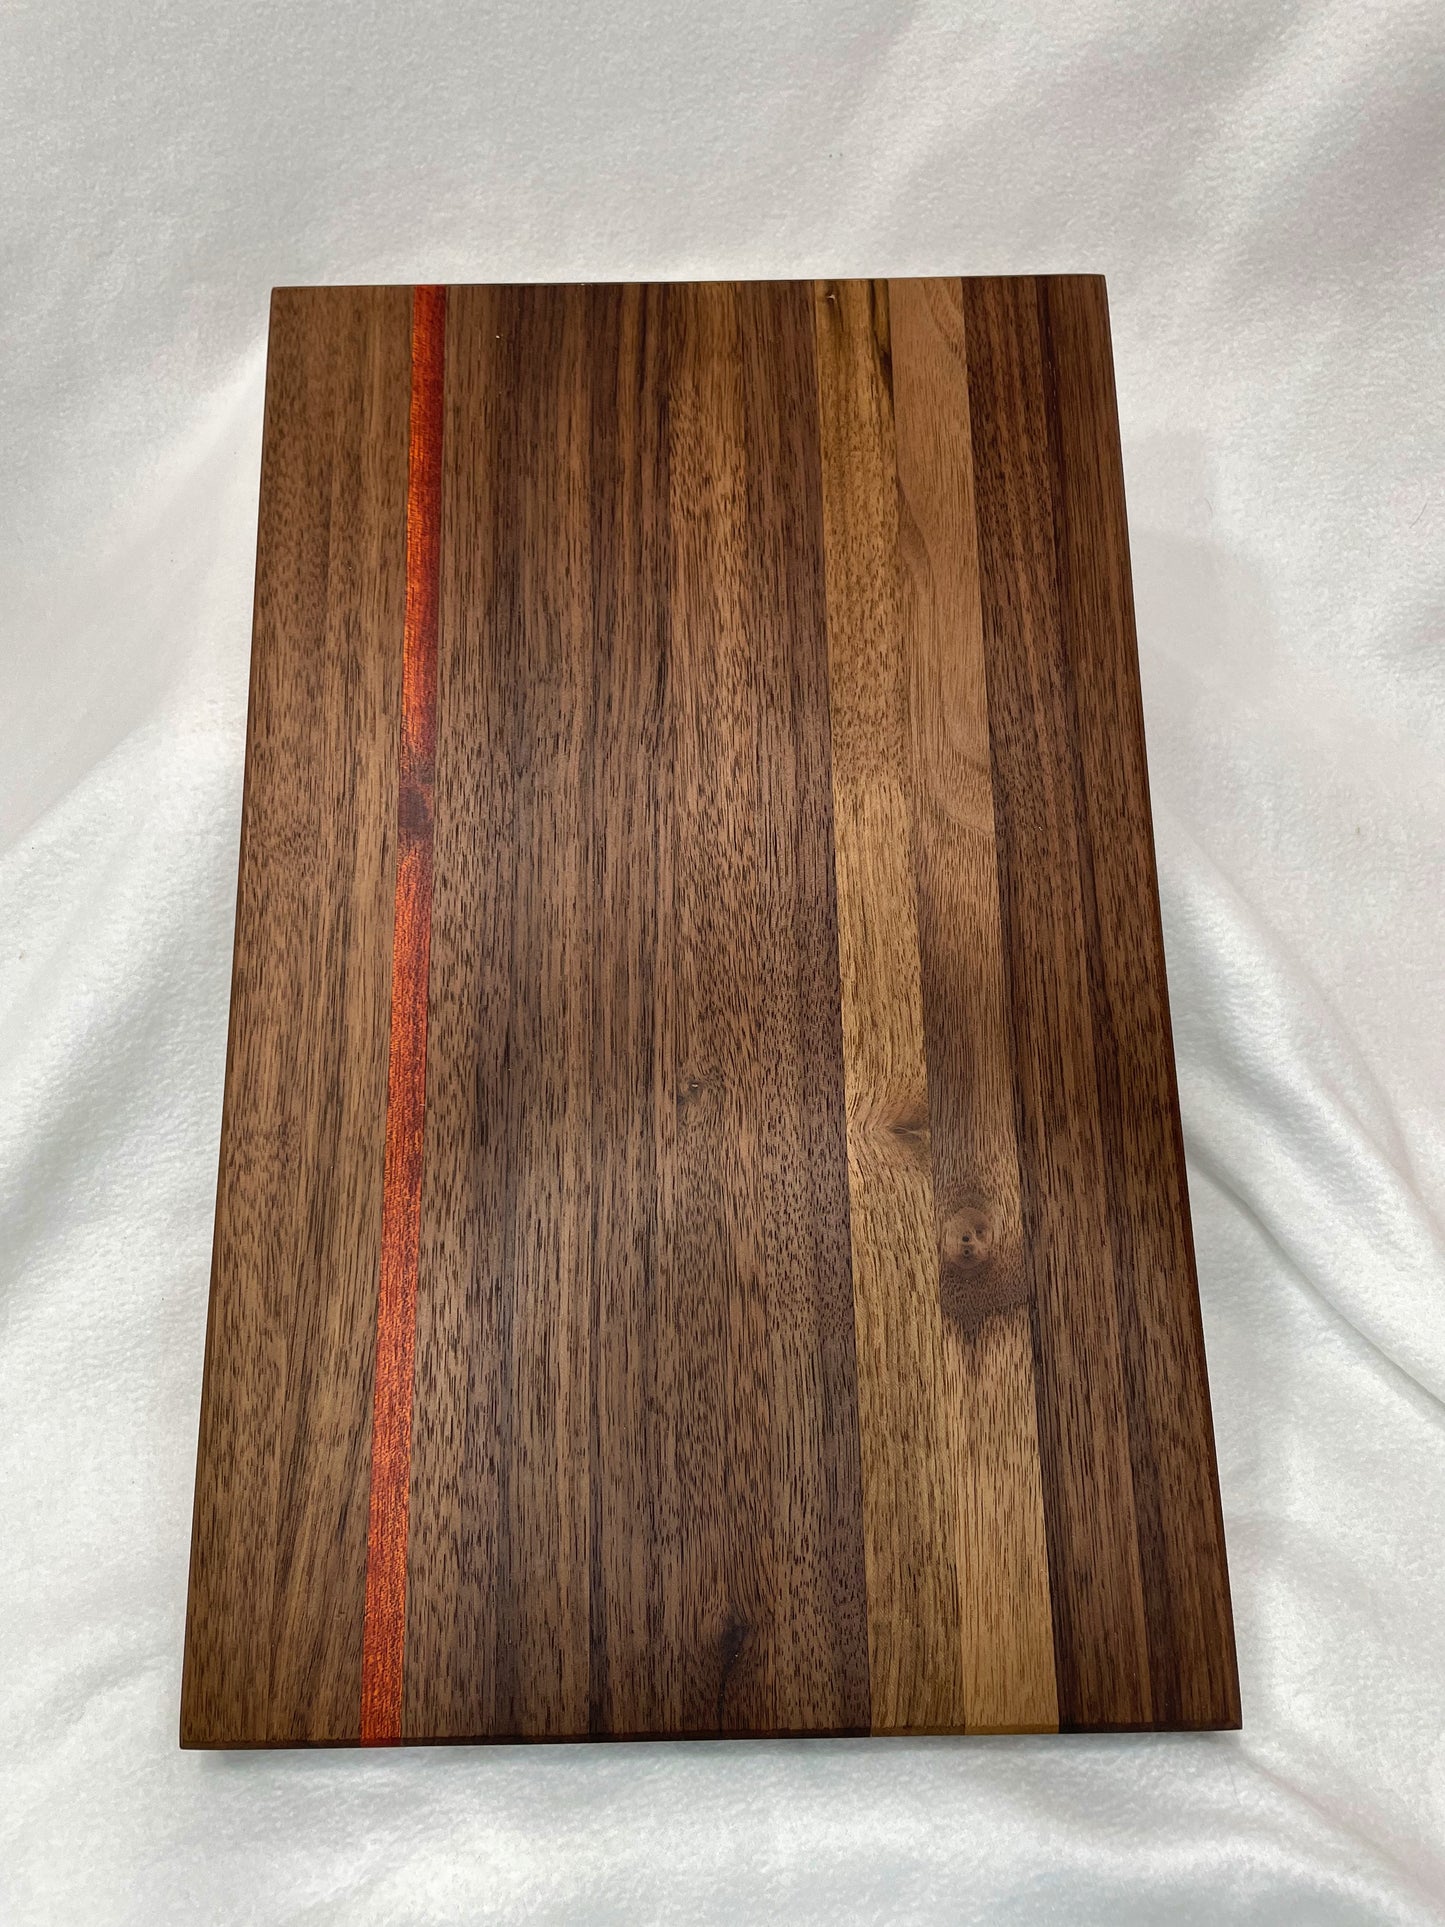 Walnut and Bloodwood Cutting Board - Edge Grain